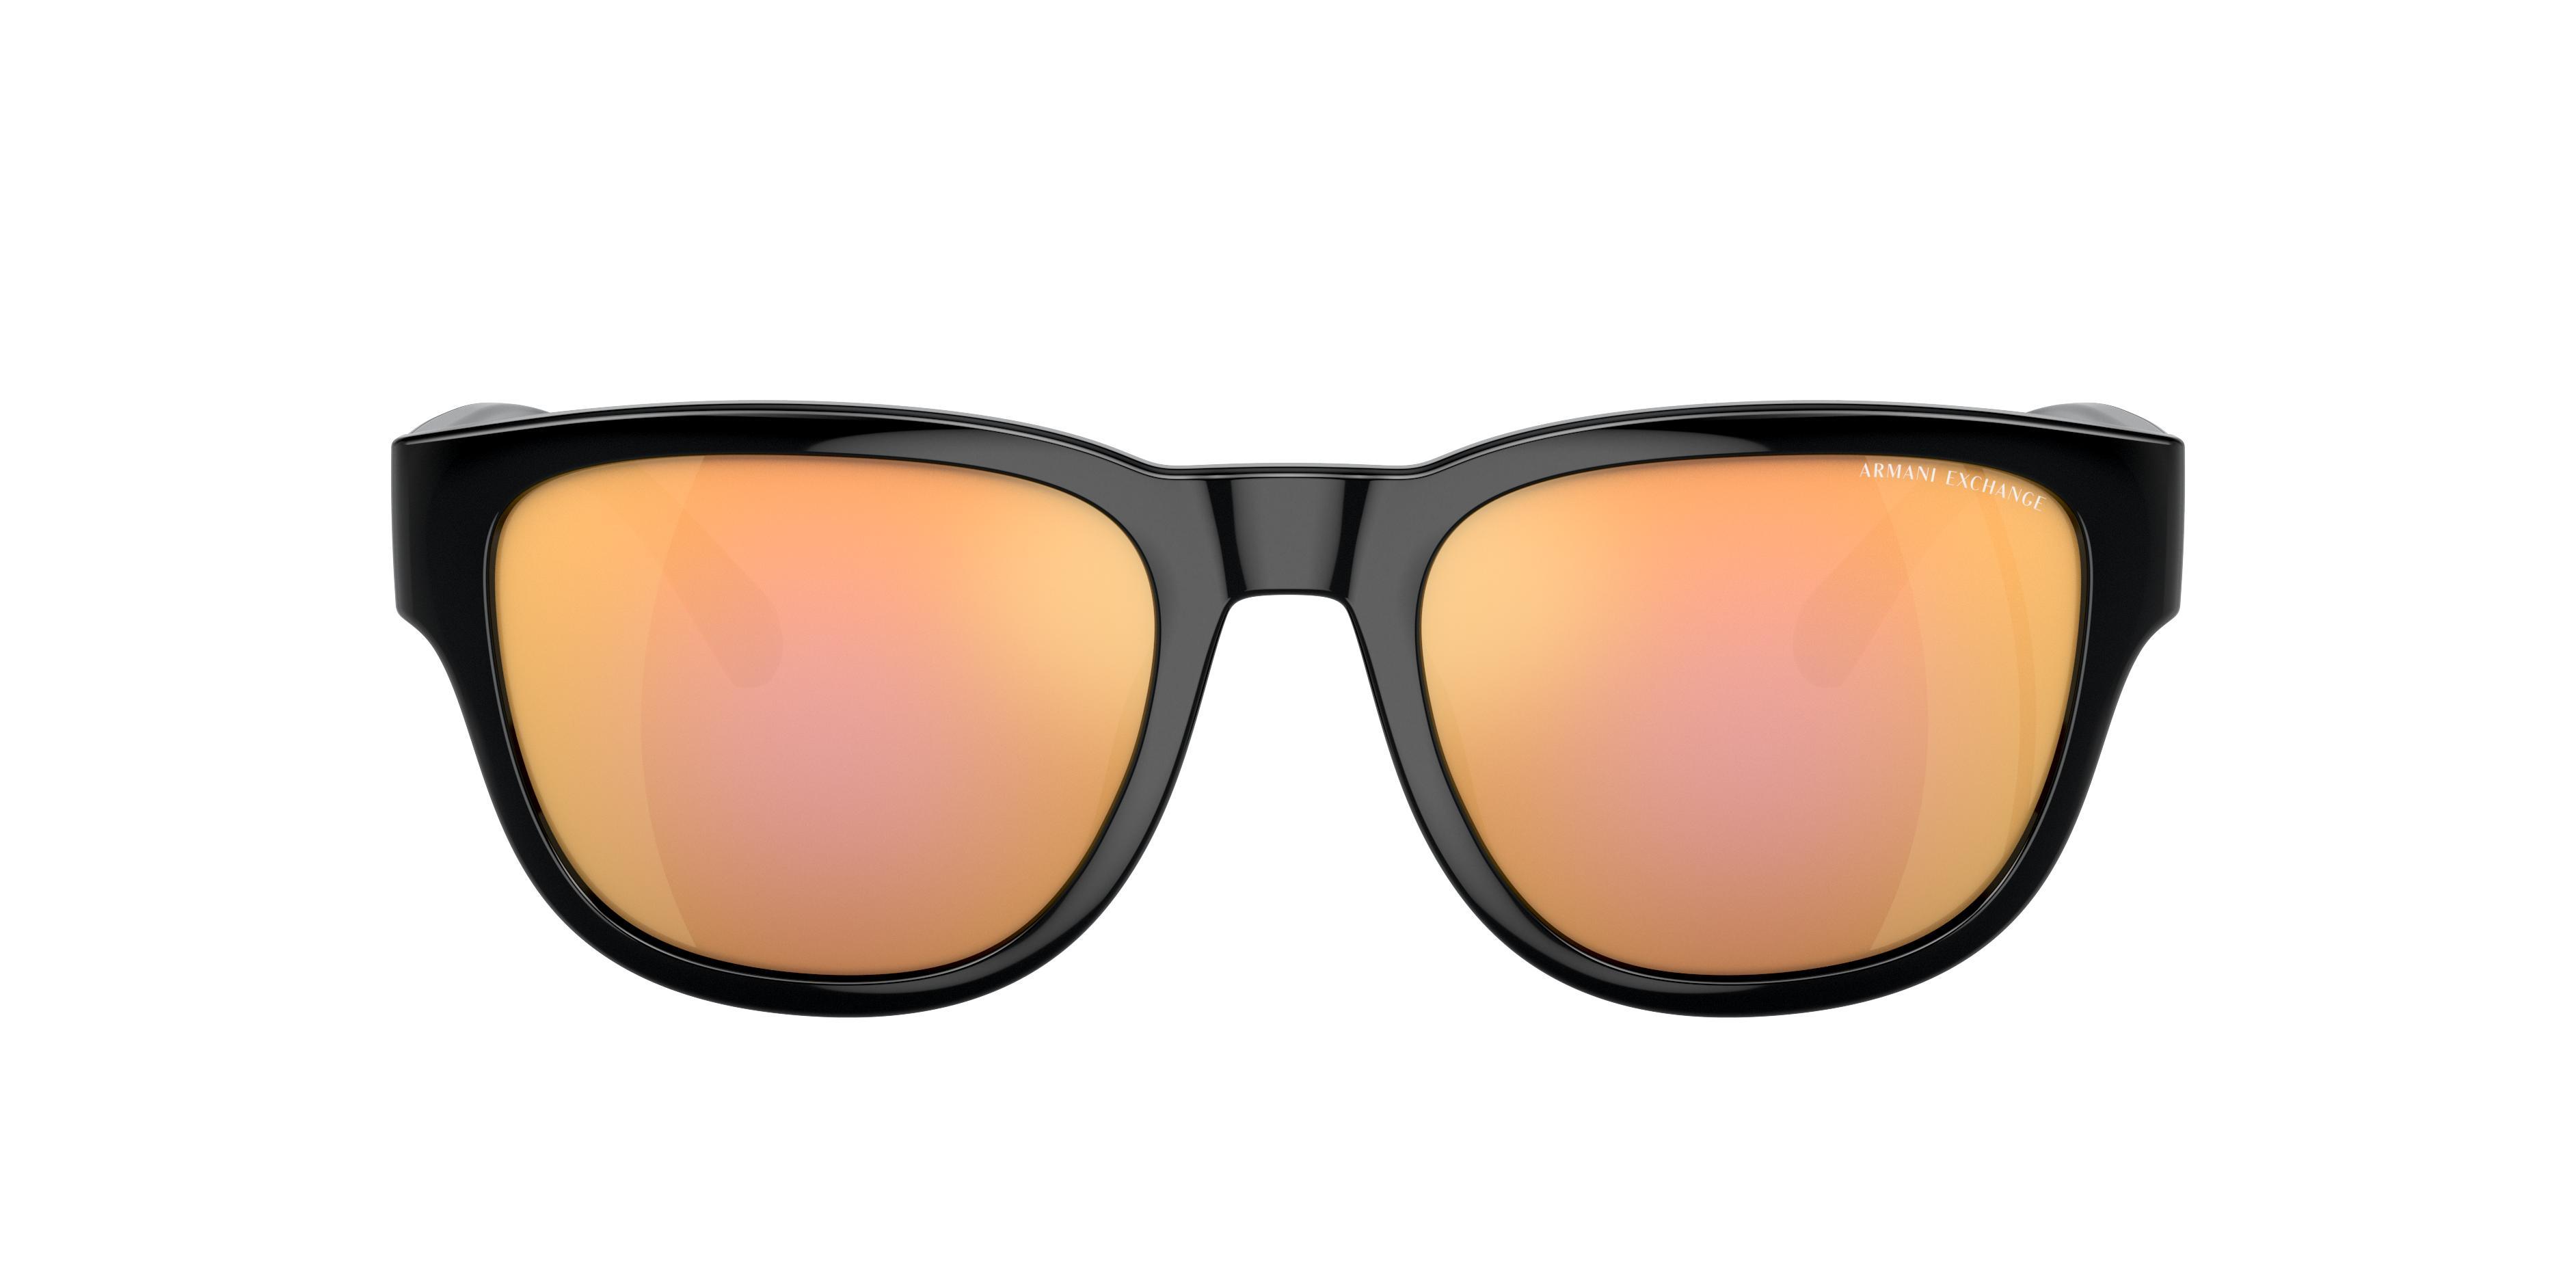 Armani Exchange 54mm Pillow Sunglasses Product Image